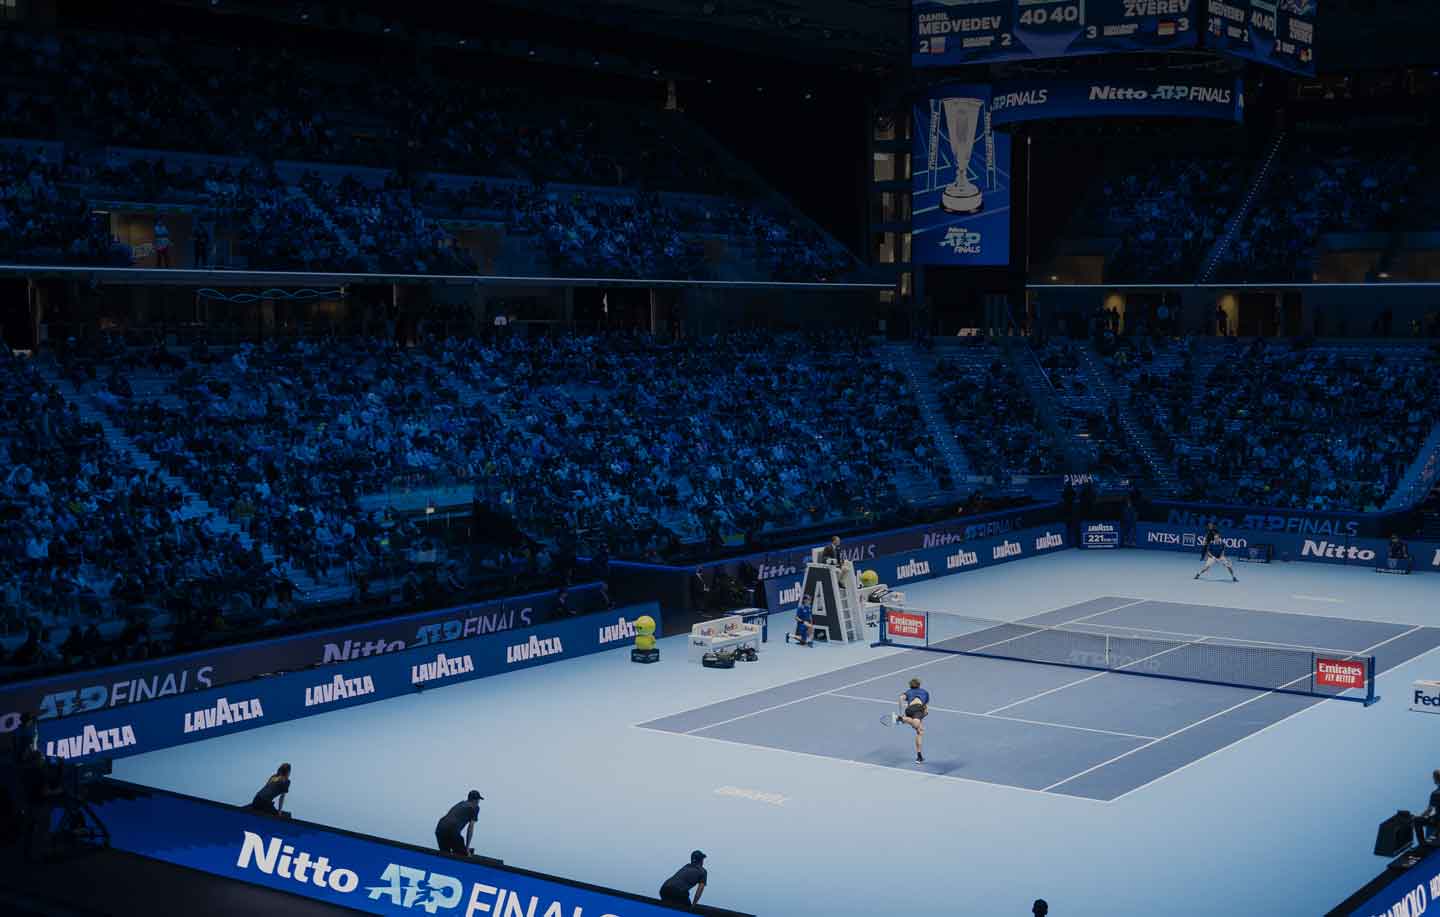 Lavazza og tennis: Det perfekte match